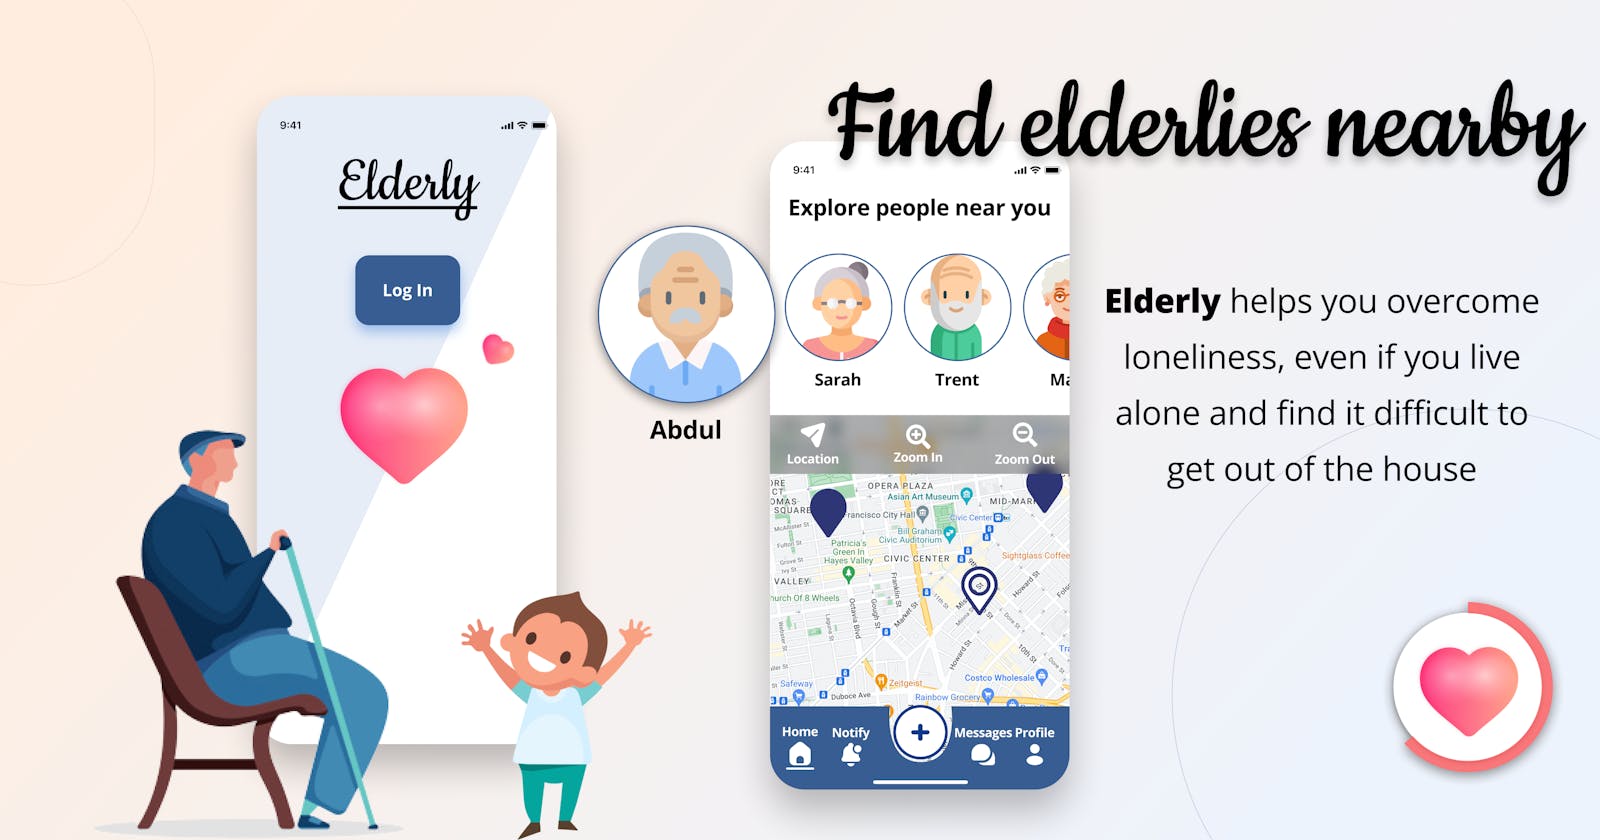 "Elderly", a meeting app for older people